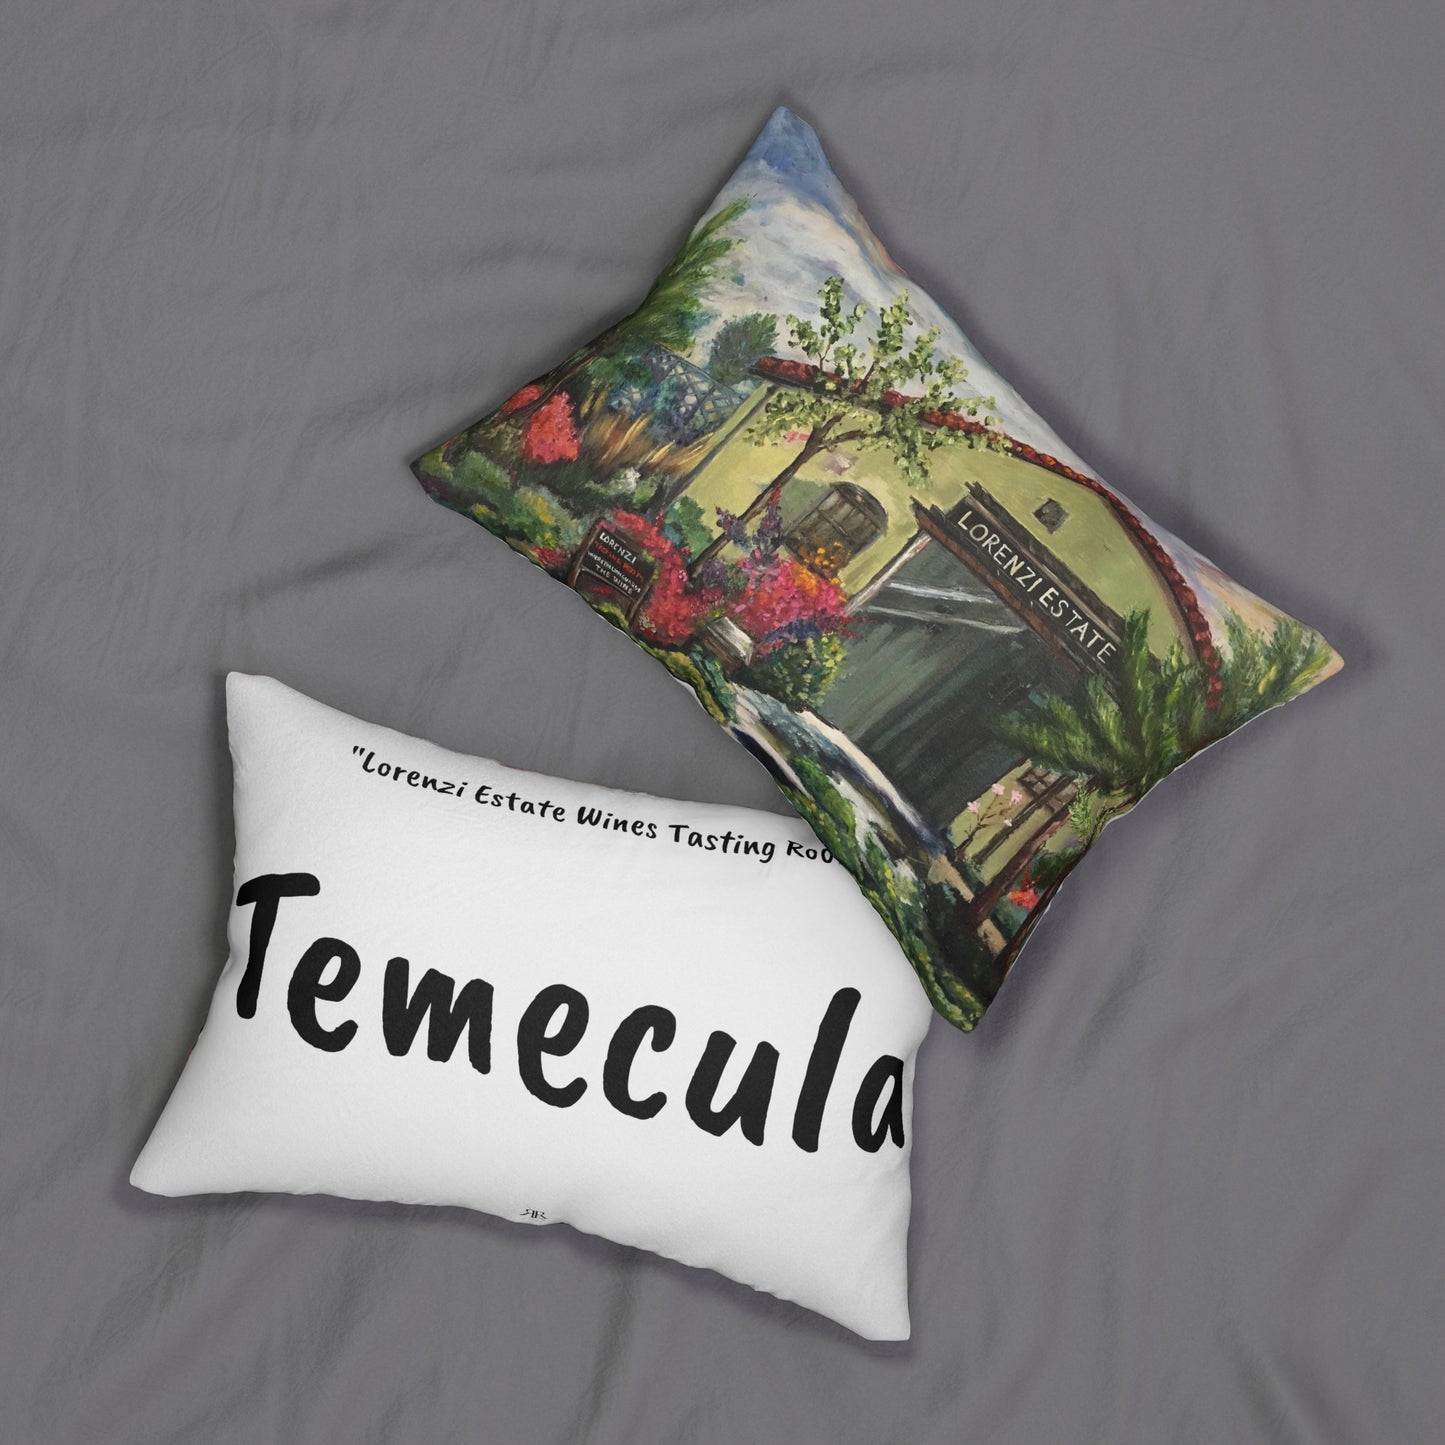 Oreiller lombaire Temecula avec peinture « Lorenzi Estate Wines Tasting Room » et « Temecula »